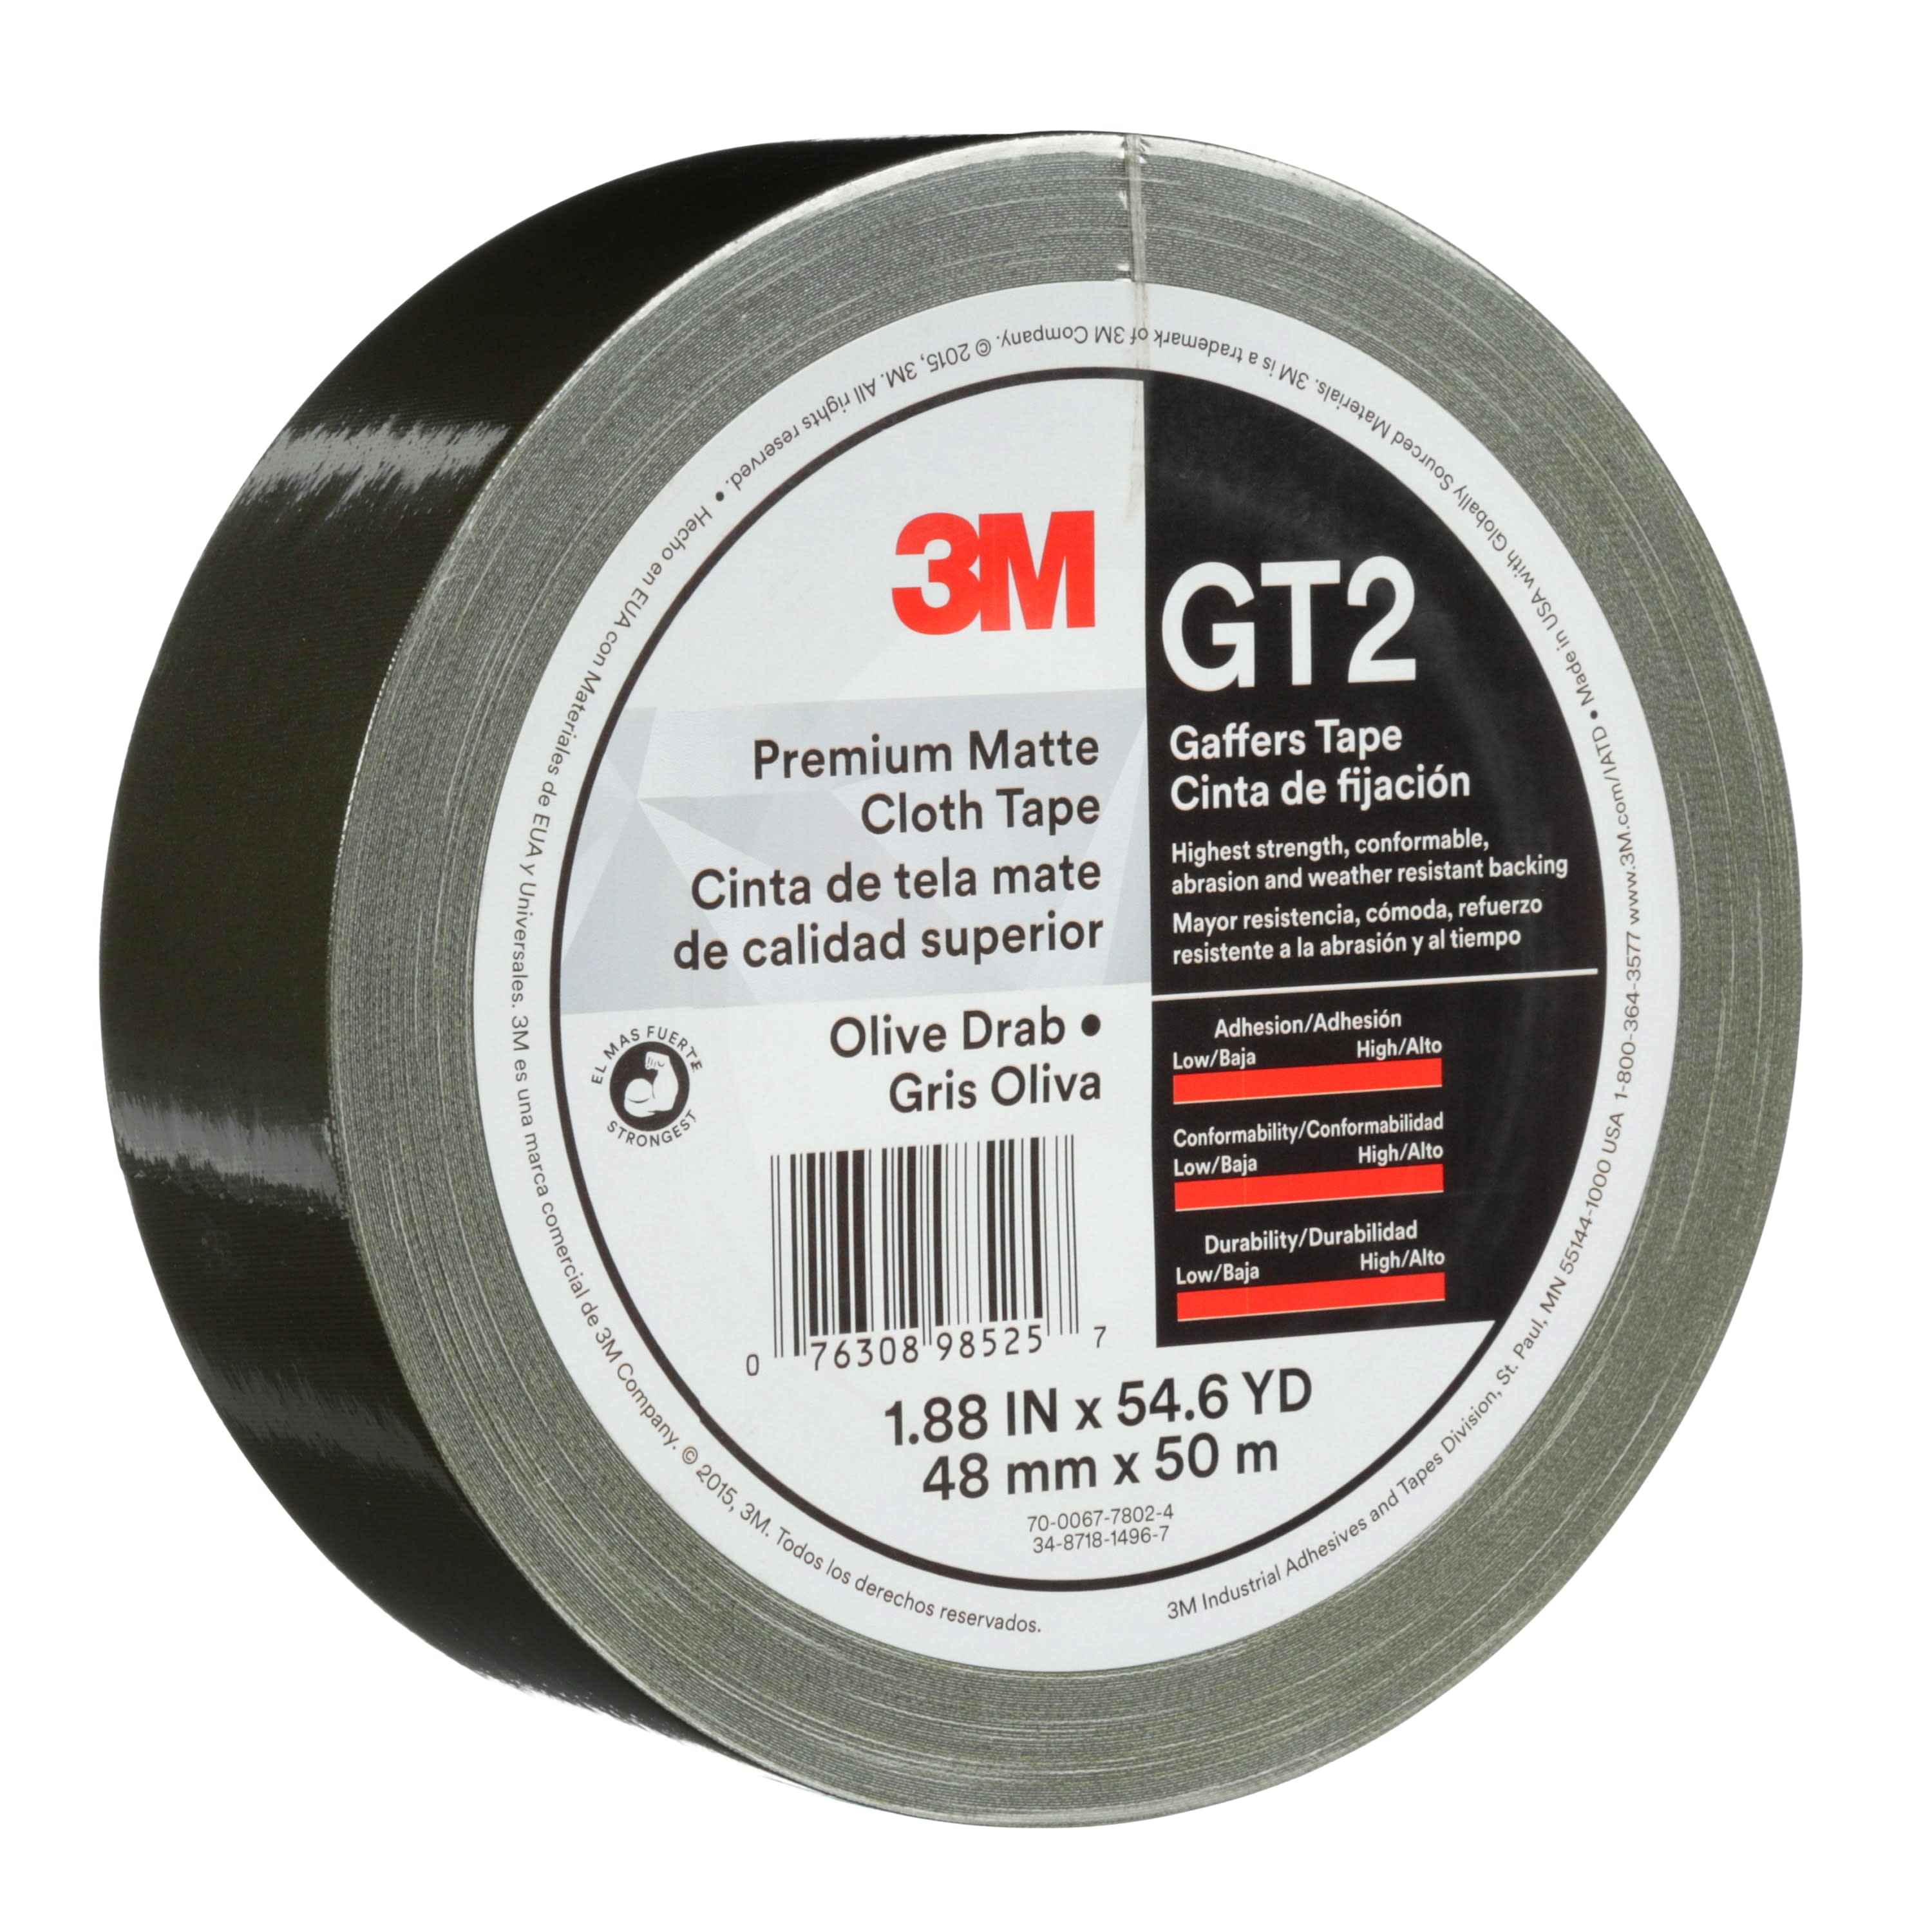 3M™ Premium Matte Cloth (Gaffers) Tape GT2, Olive Drab, 48 mm x 50 m, 11
mil, 24 per case